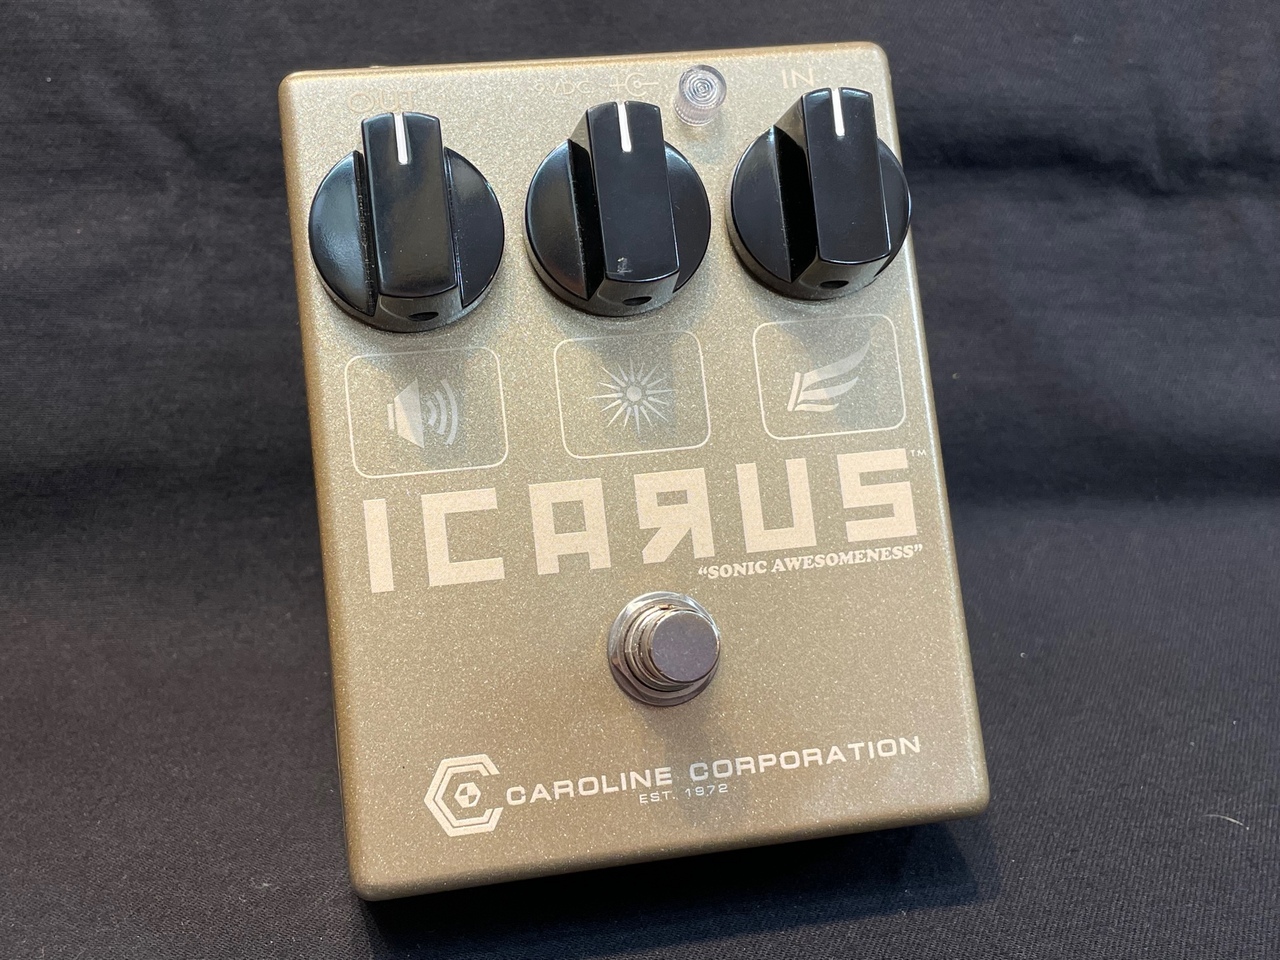 Caroline Guitar Company ICARUS V2